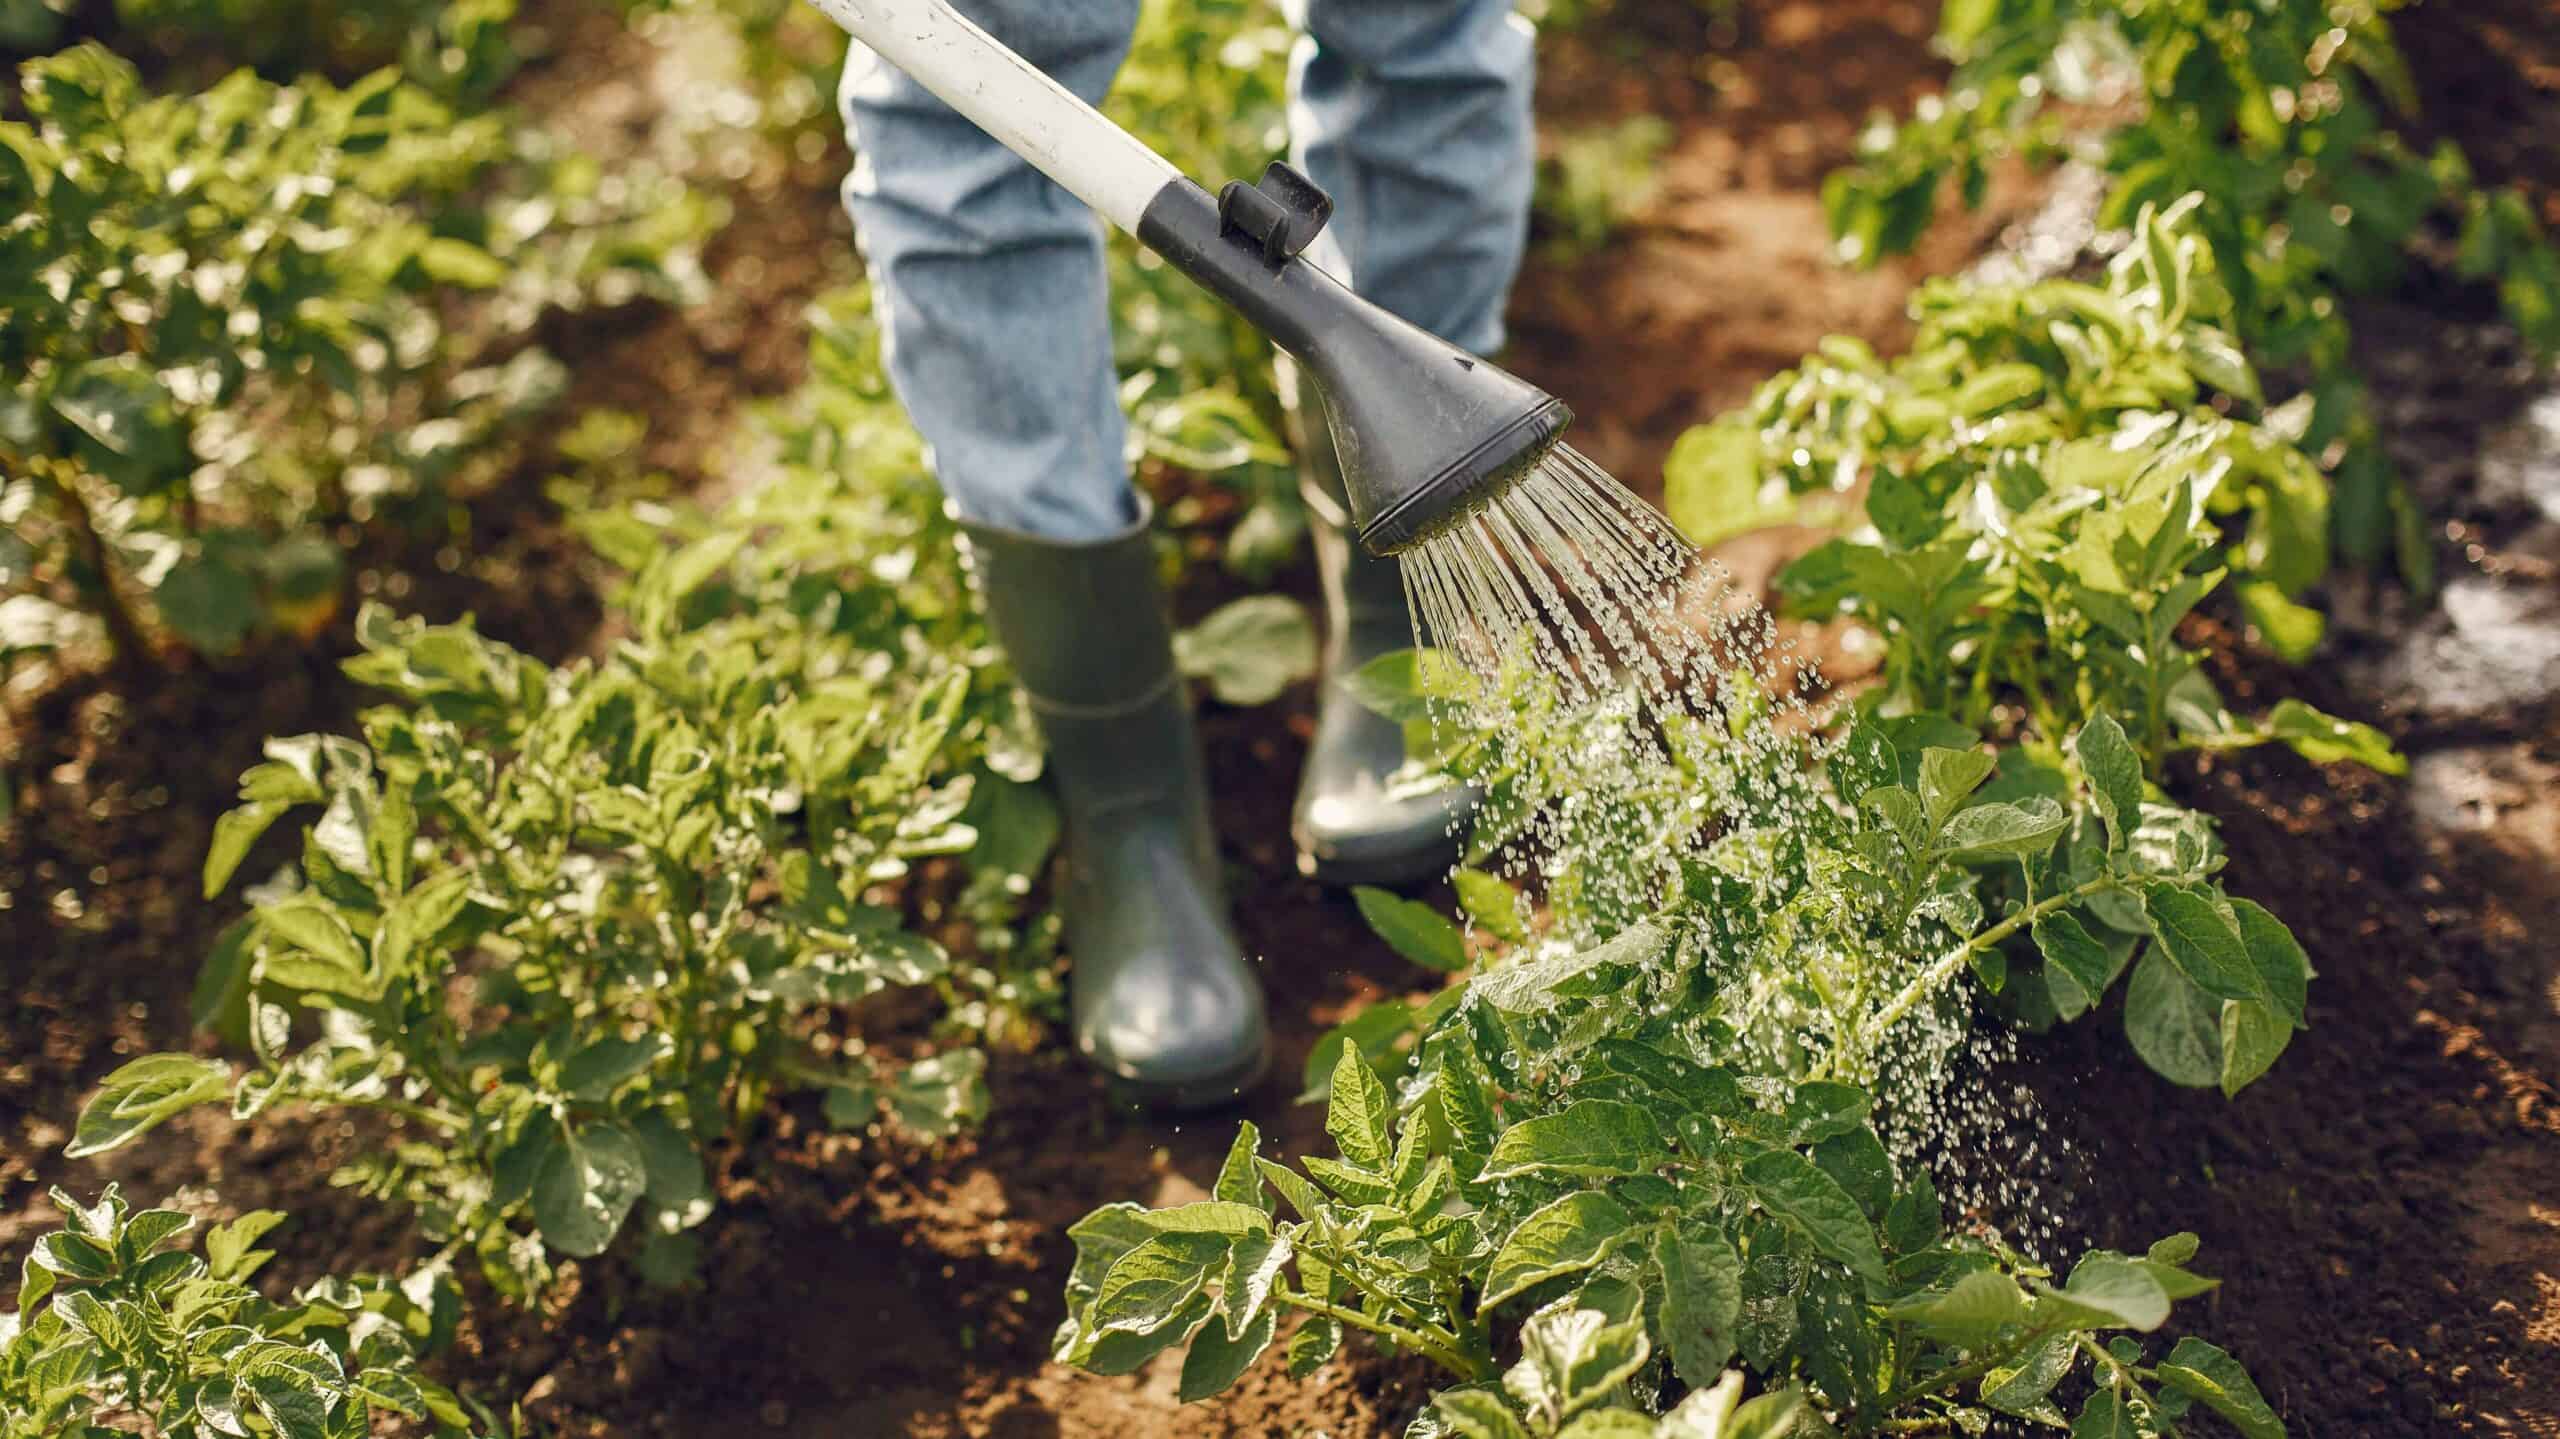 Watering Healthy Crops with Natural Bioformulant: Nourishing Growth the Organic Way